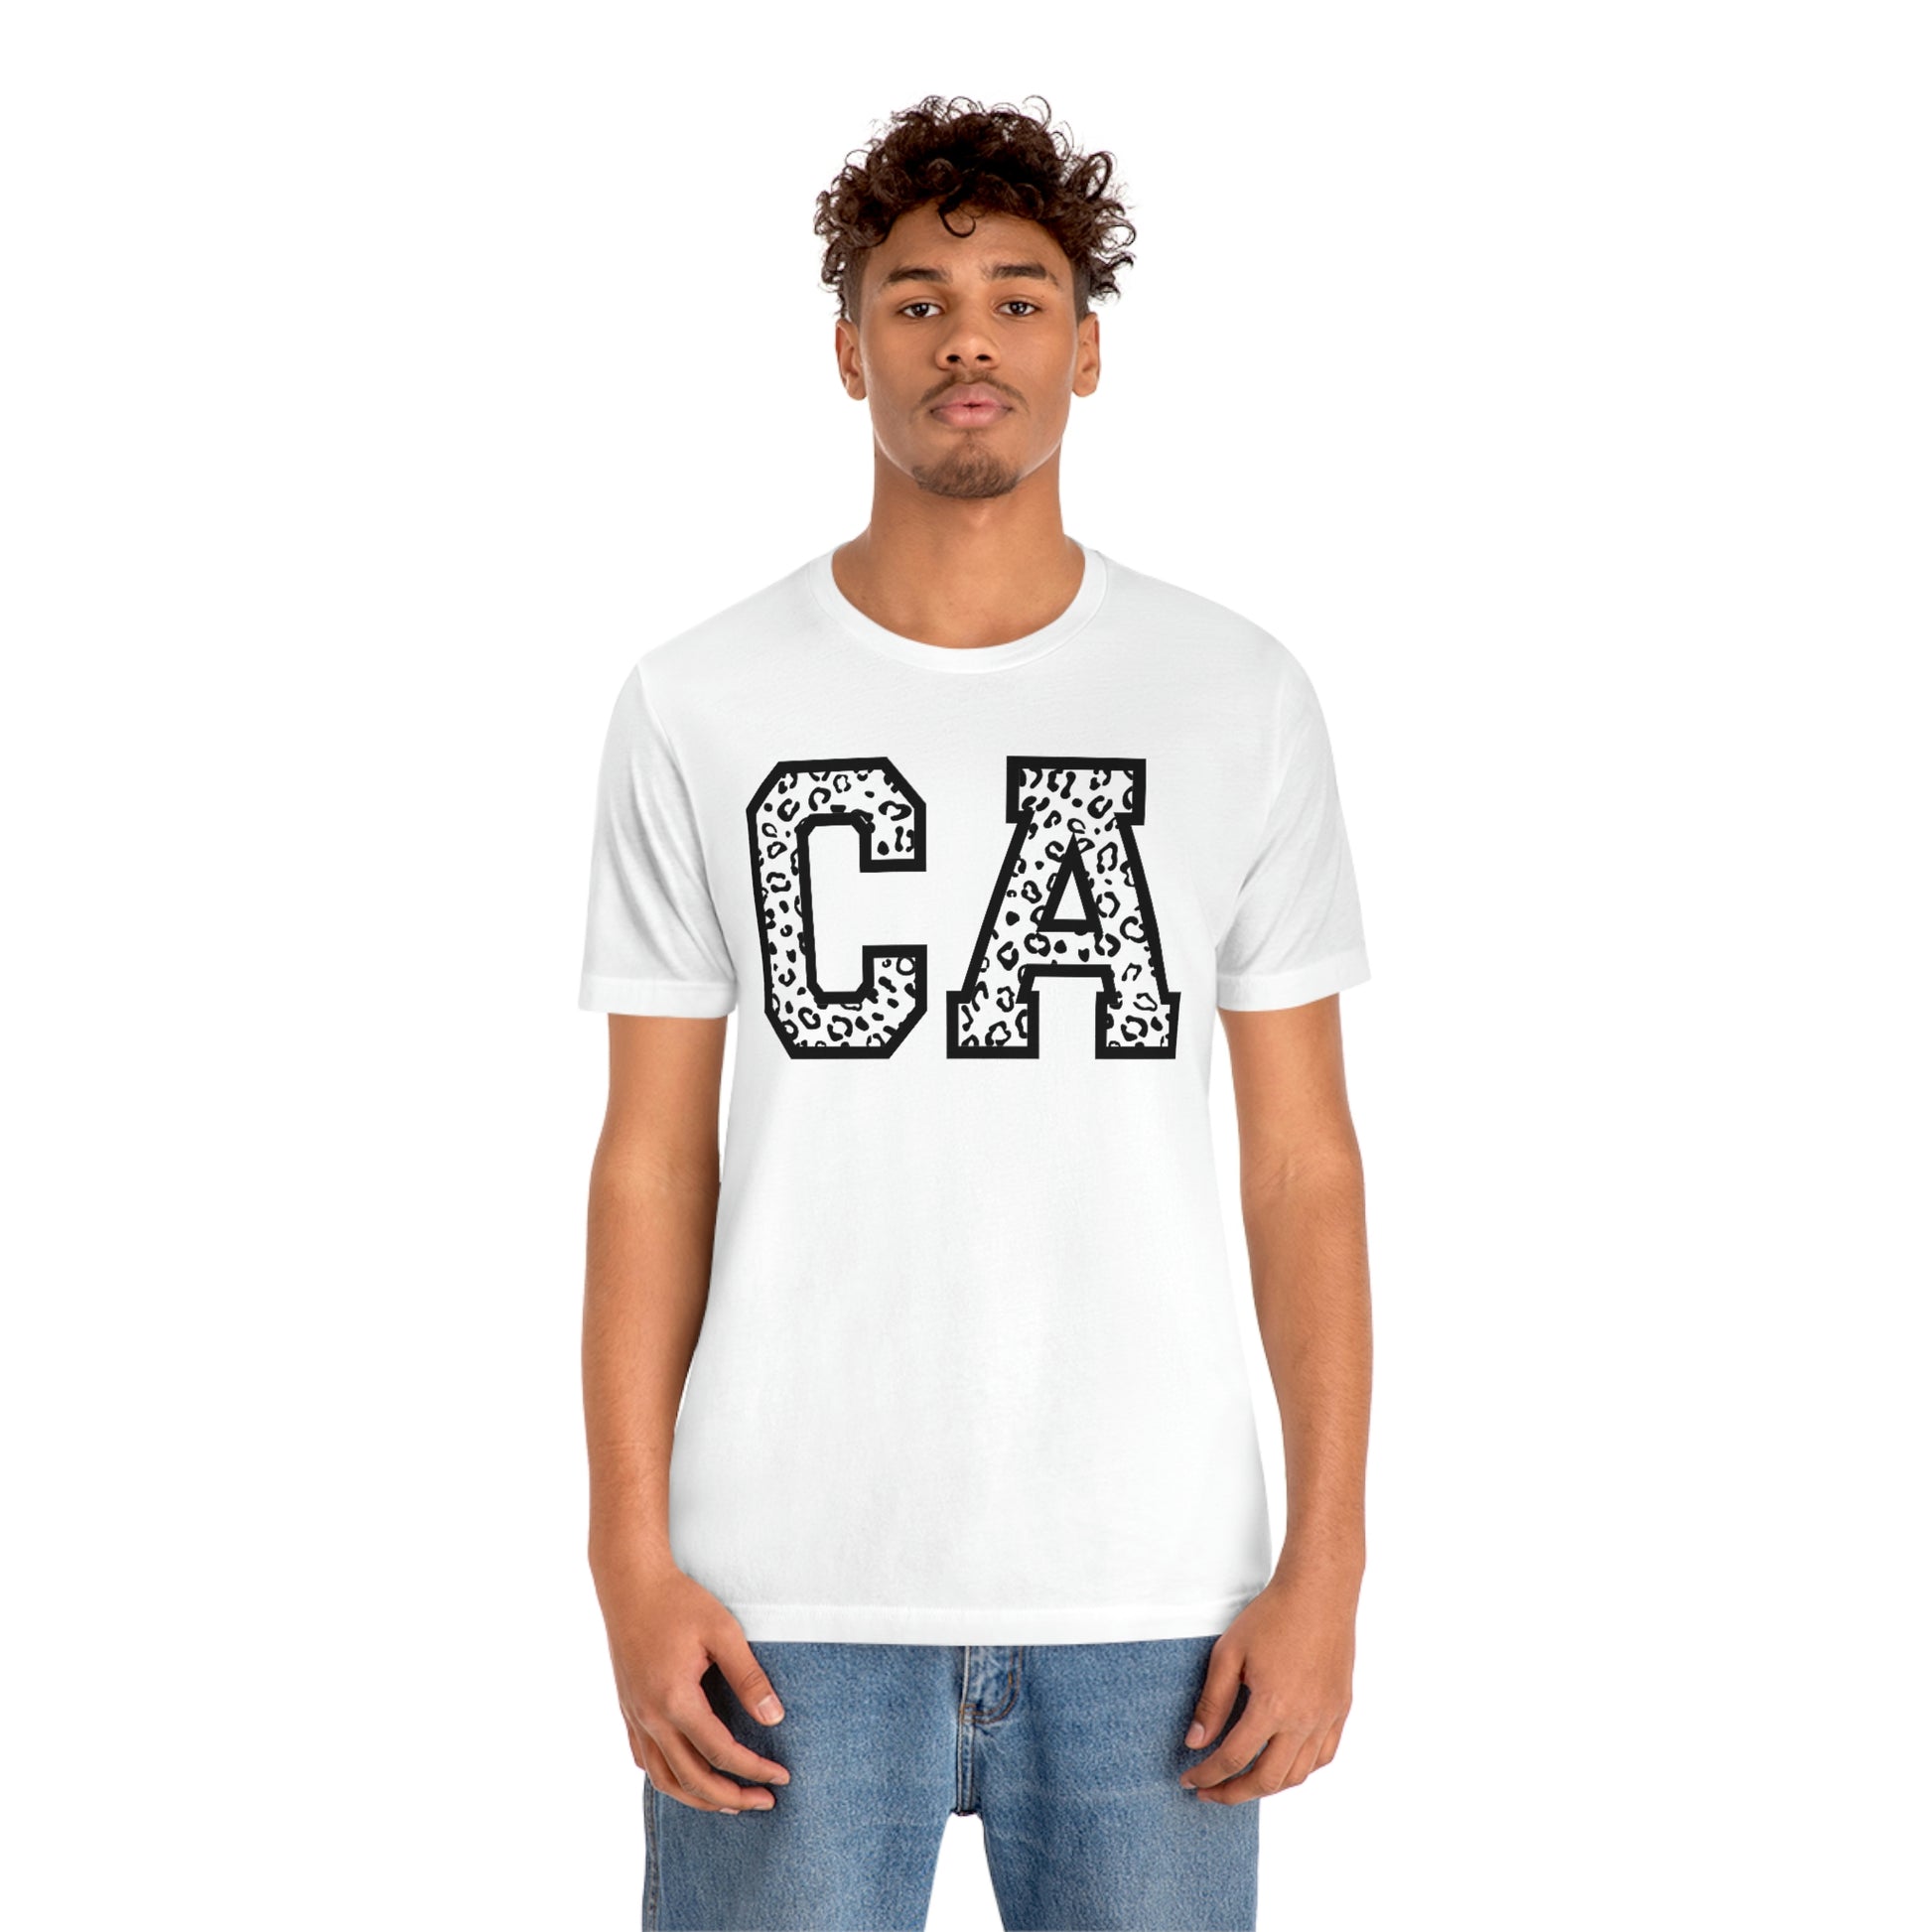 California CA Leopard Print Unisex Jersey Short Sleeve Tee Tshirt T-shirt